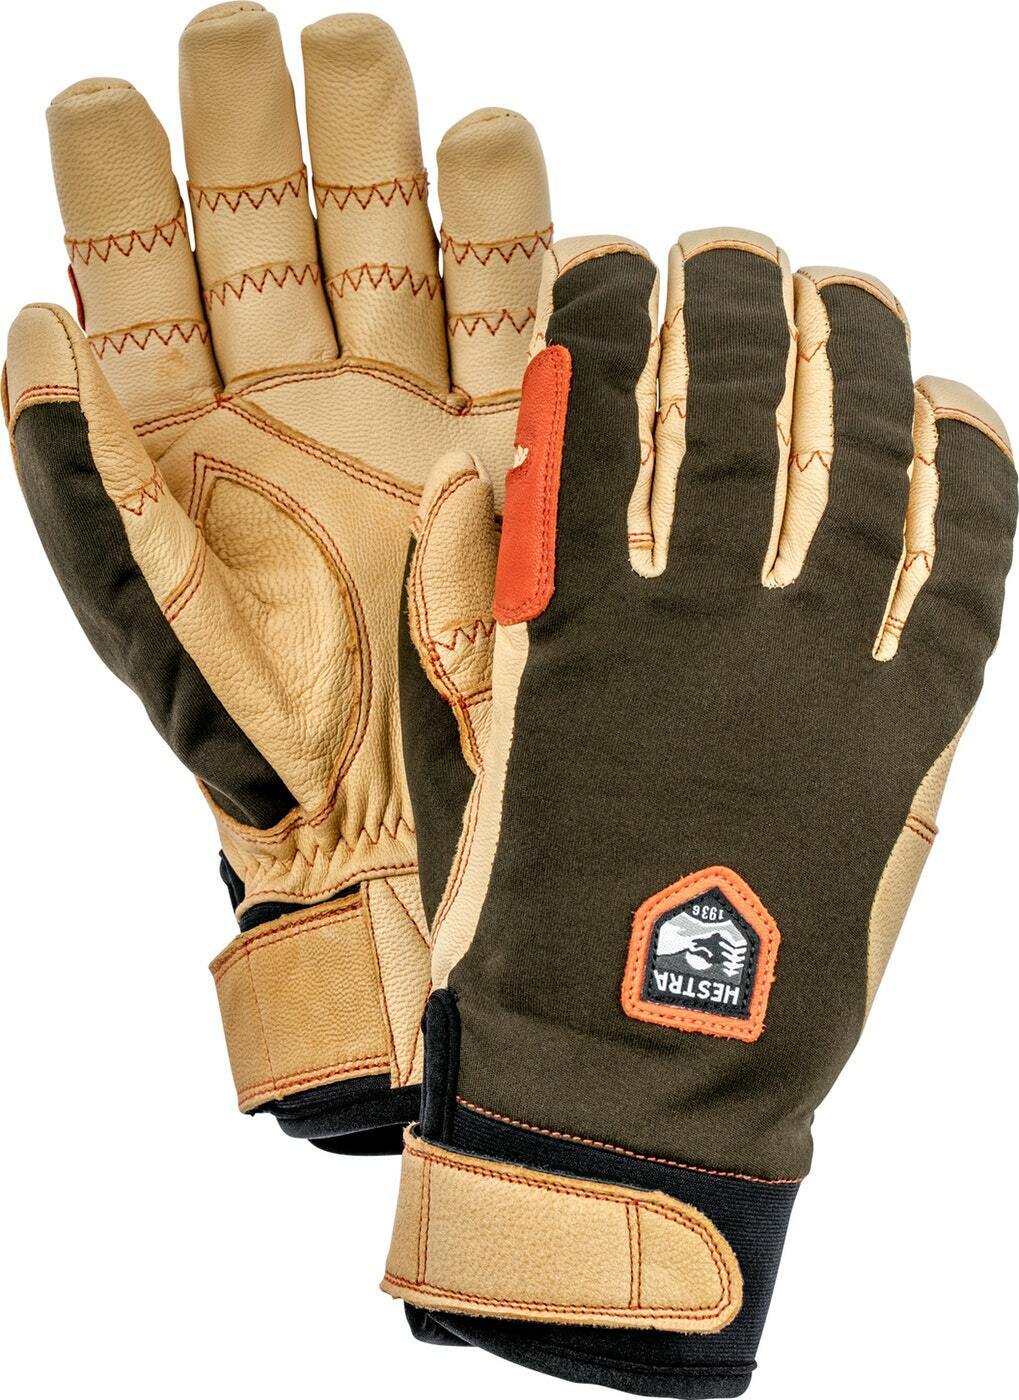 2022 Men's Hestra Ergo Leather 5 Finger Ski Gloves Size 11 Forest / Tan 32950 Świetne oferty